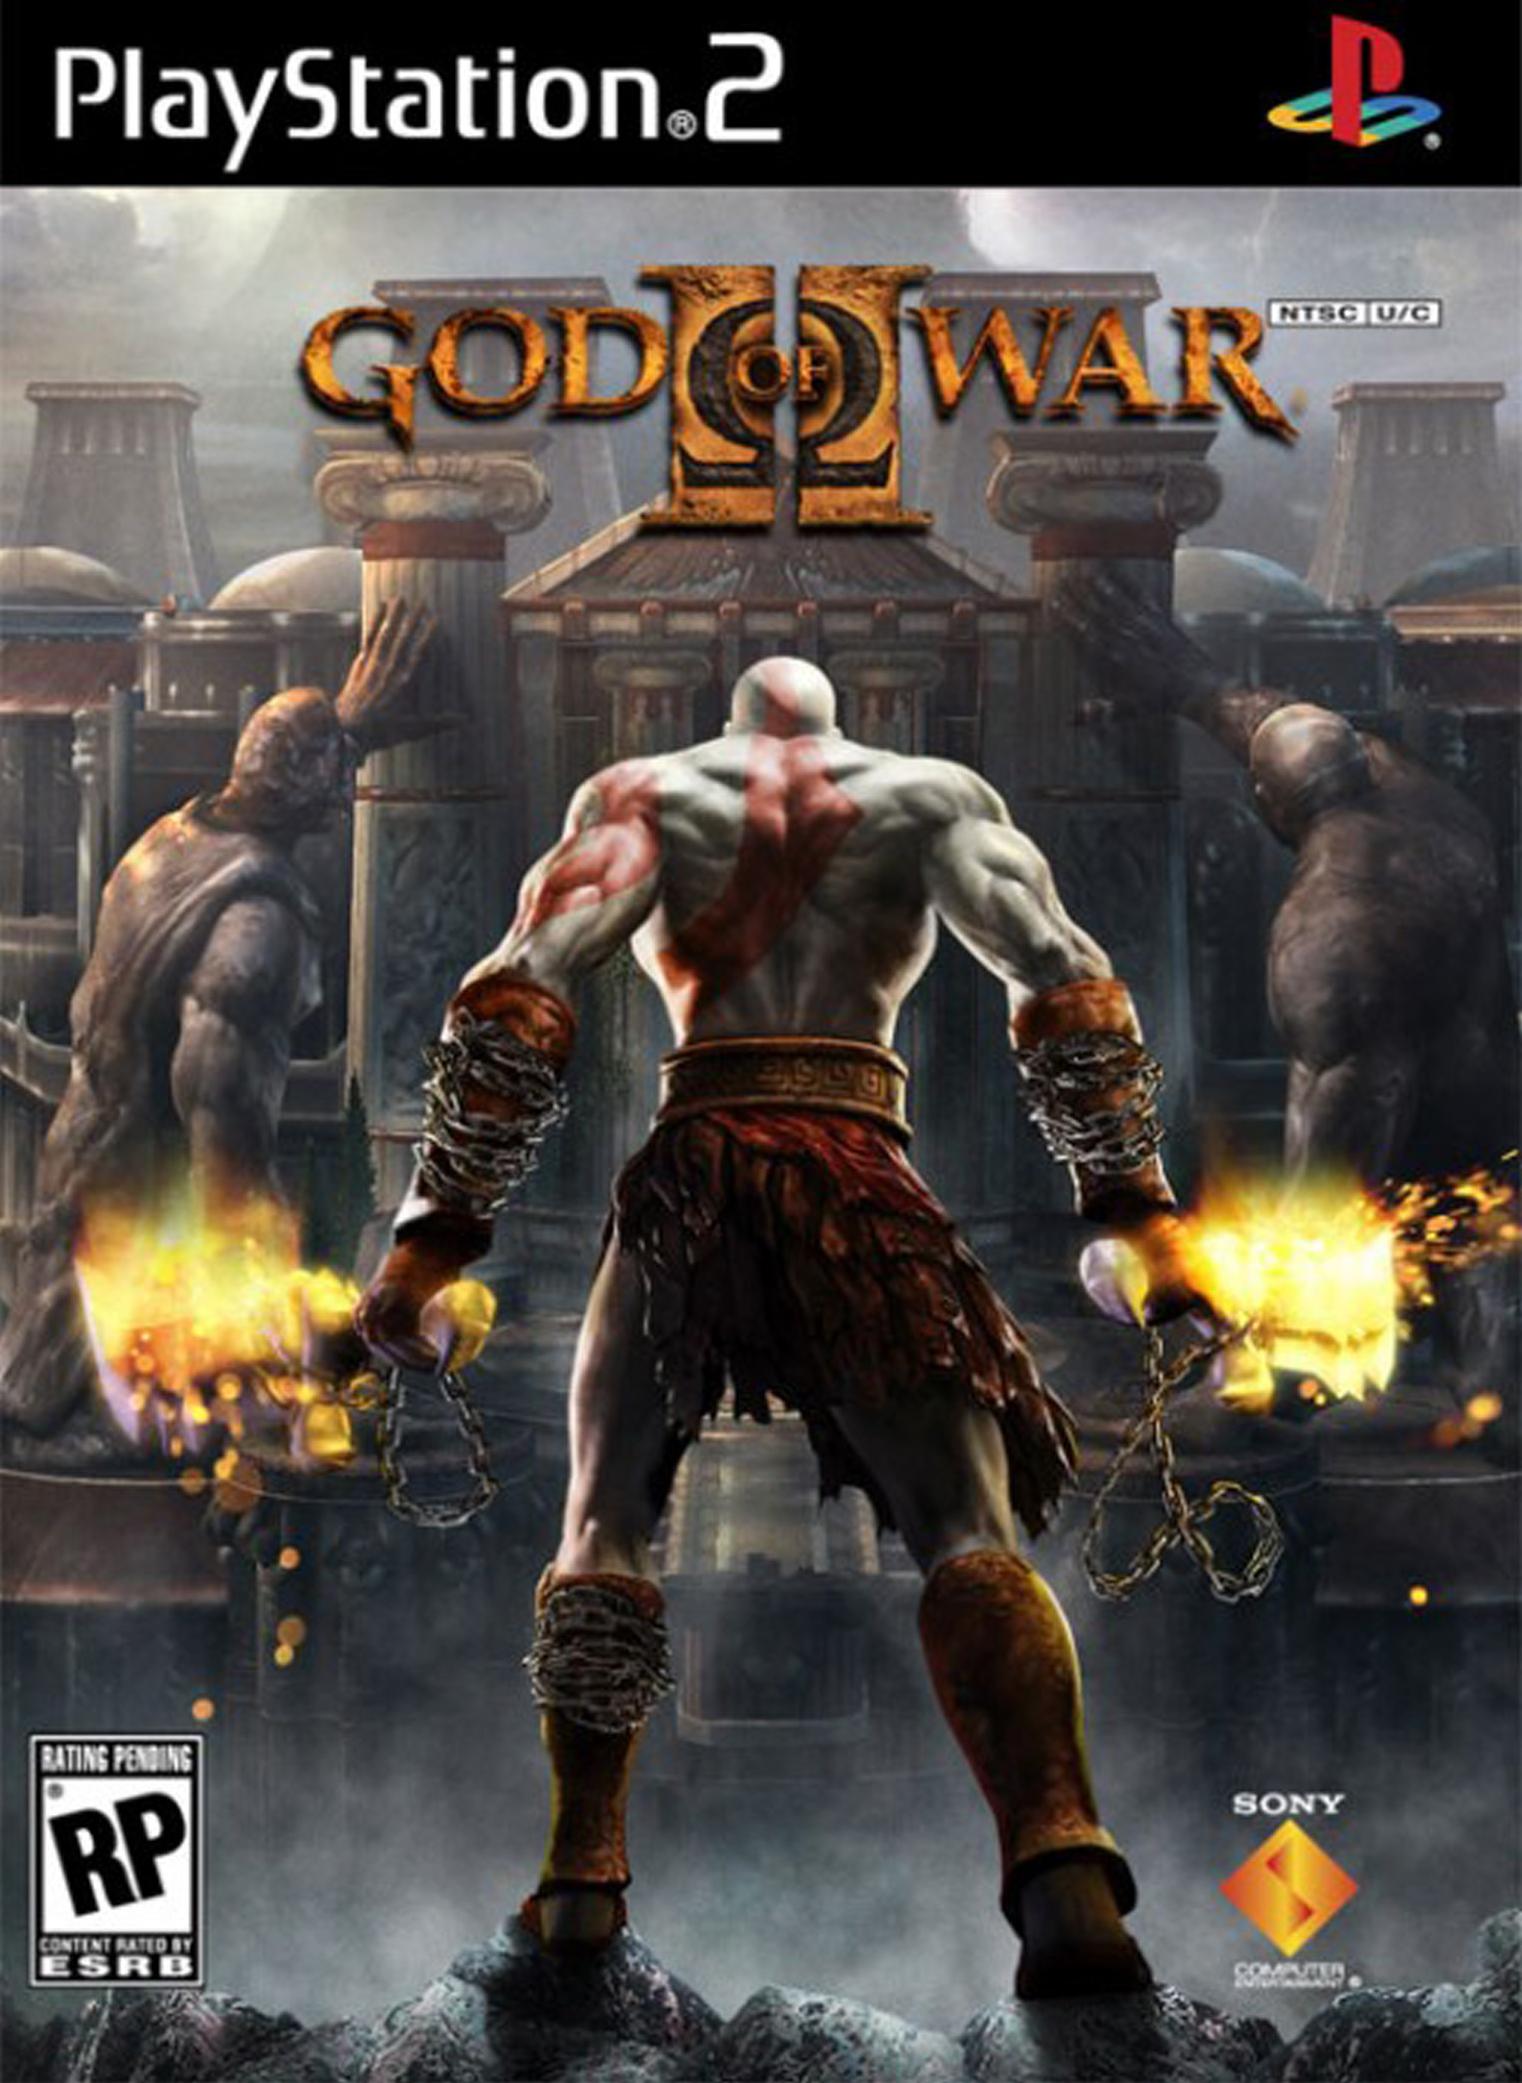 God of War Collection - PlayStation Vita Launch Trailer 